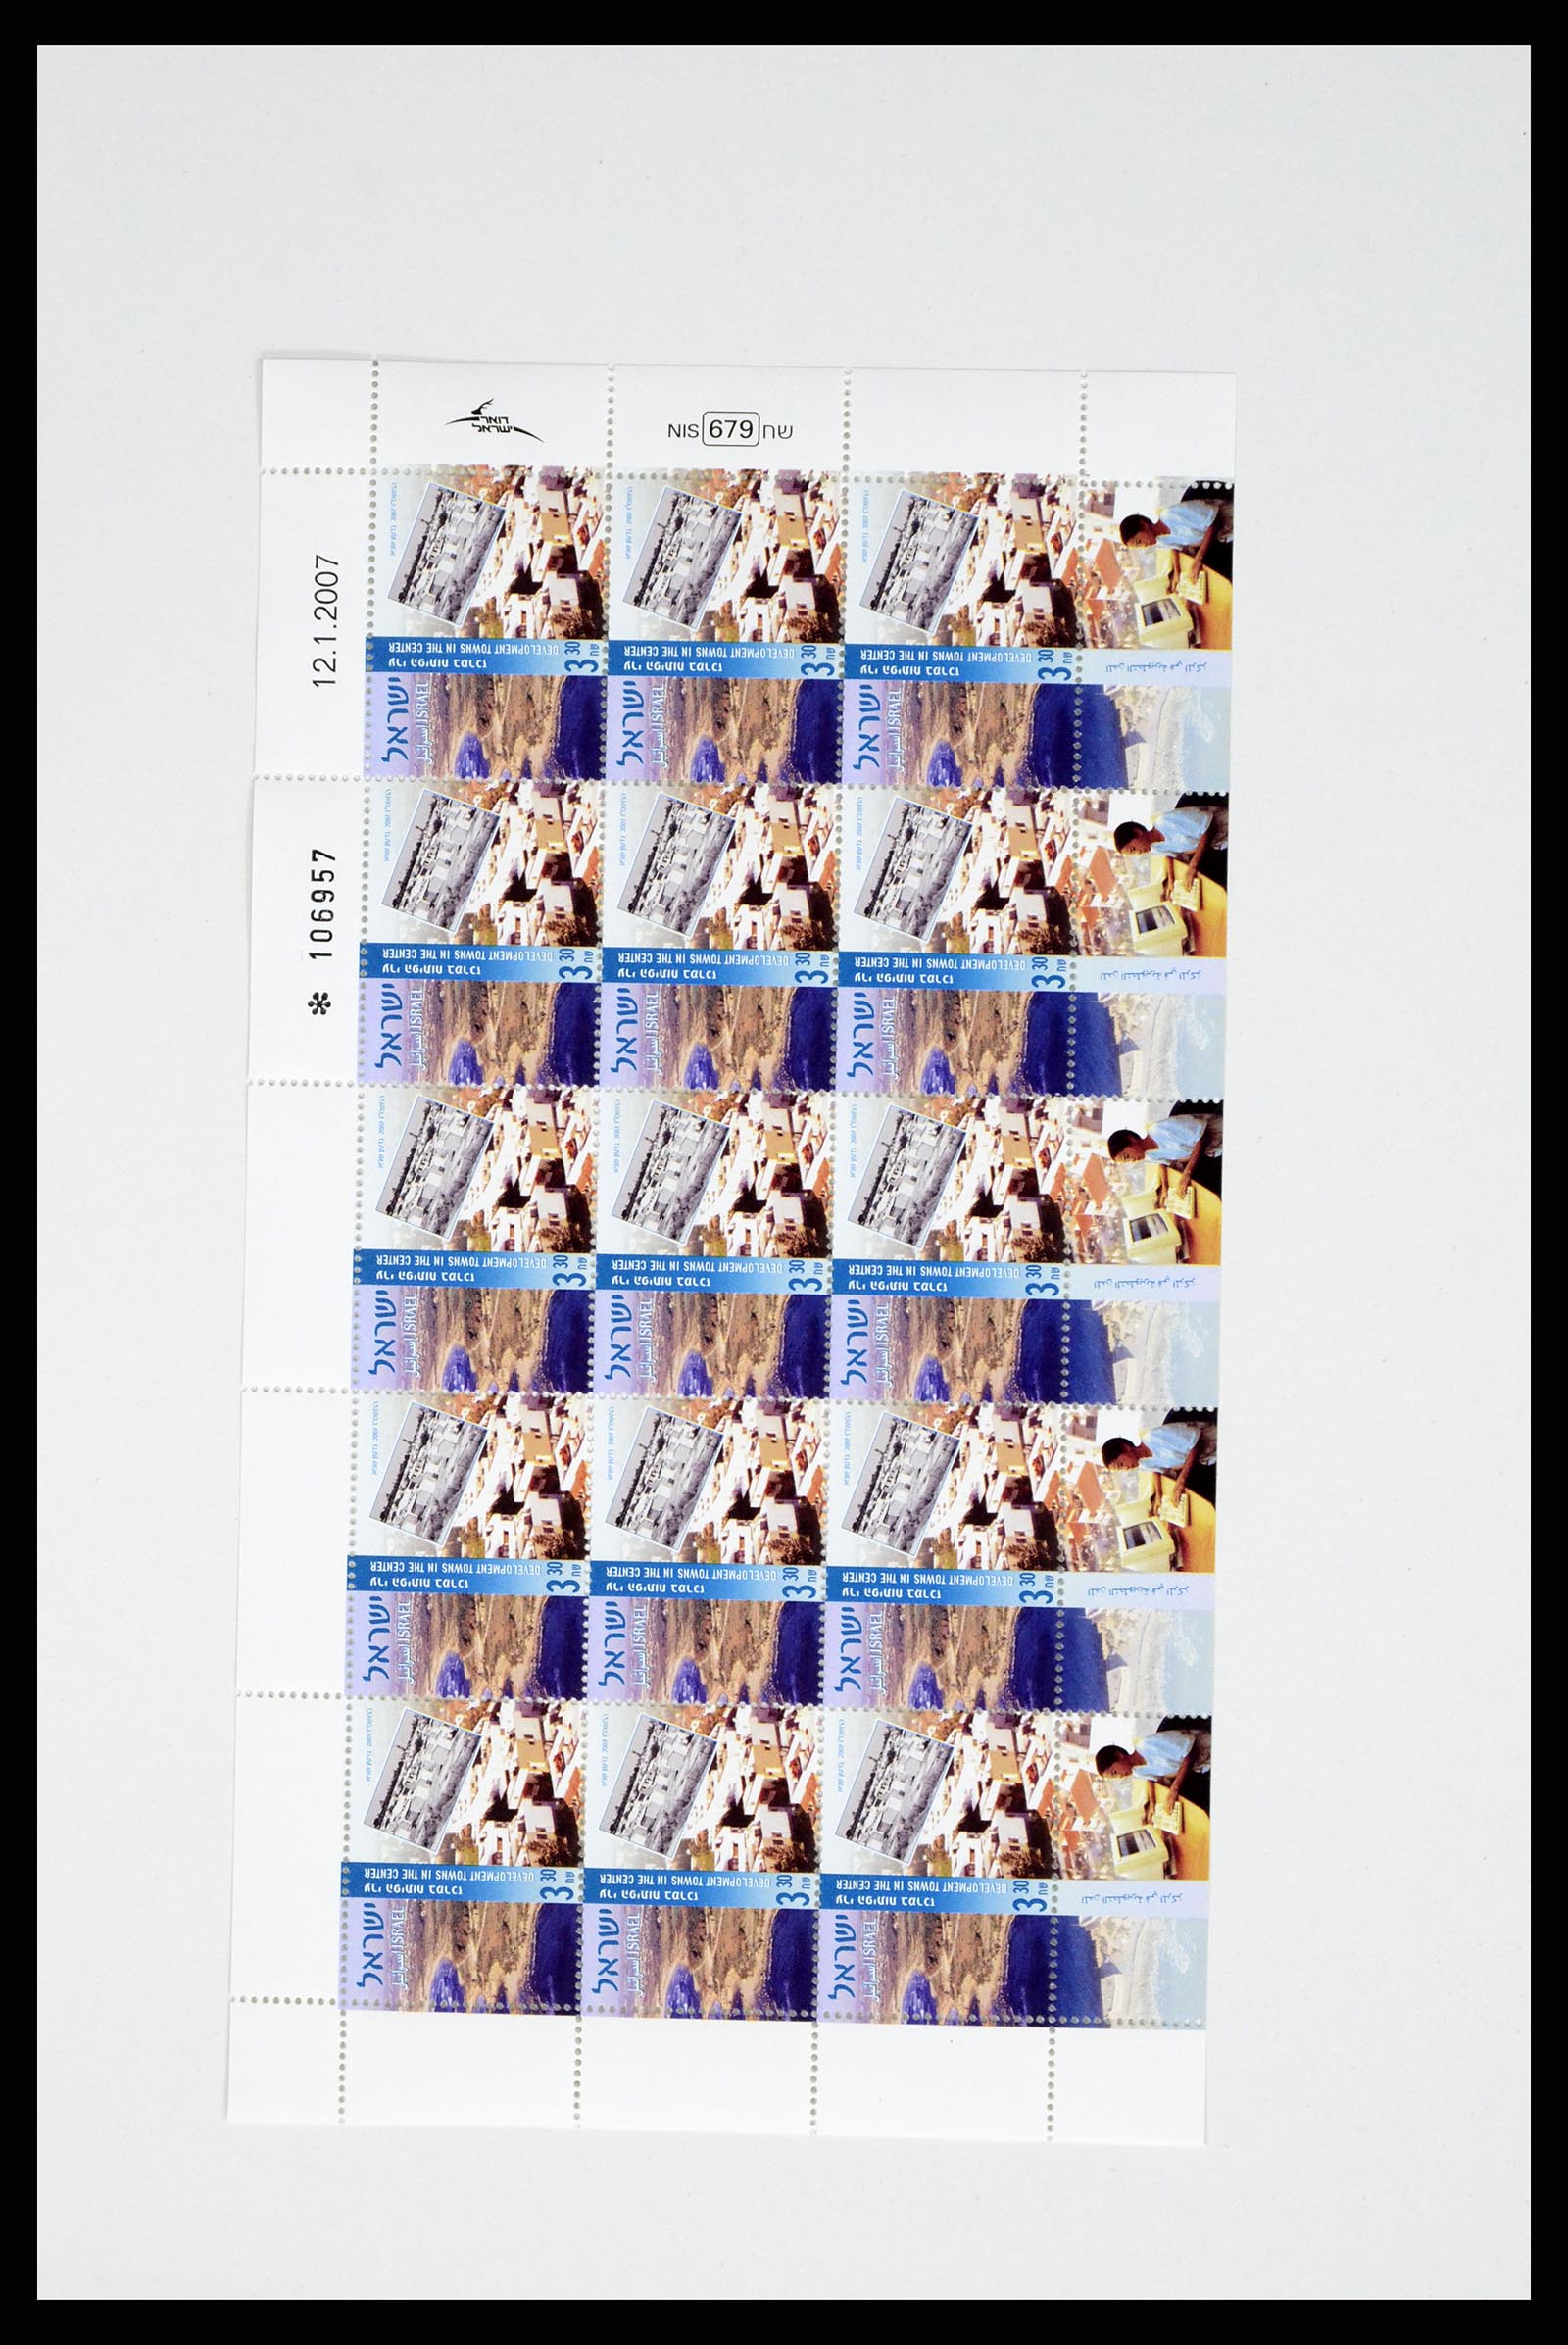 37779 031 - Stamp collection 37779 Israel sheetlets 1986-2009.